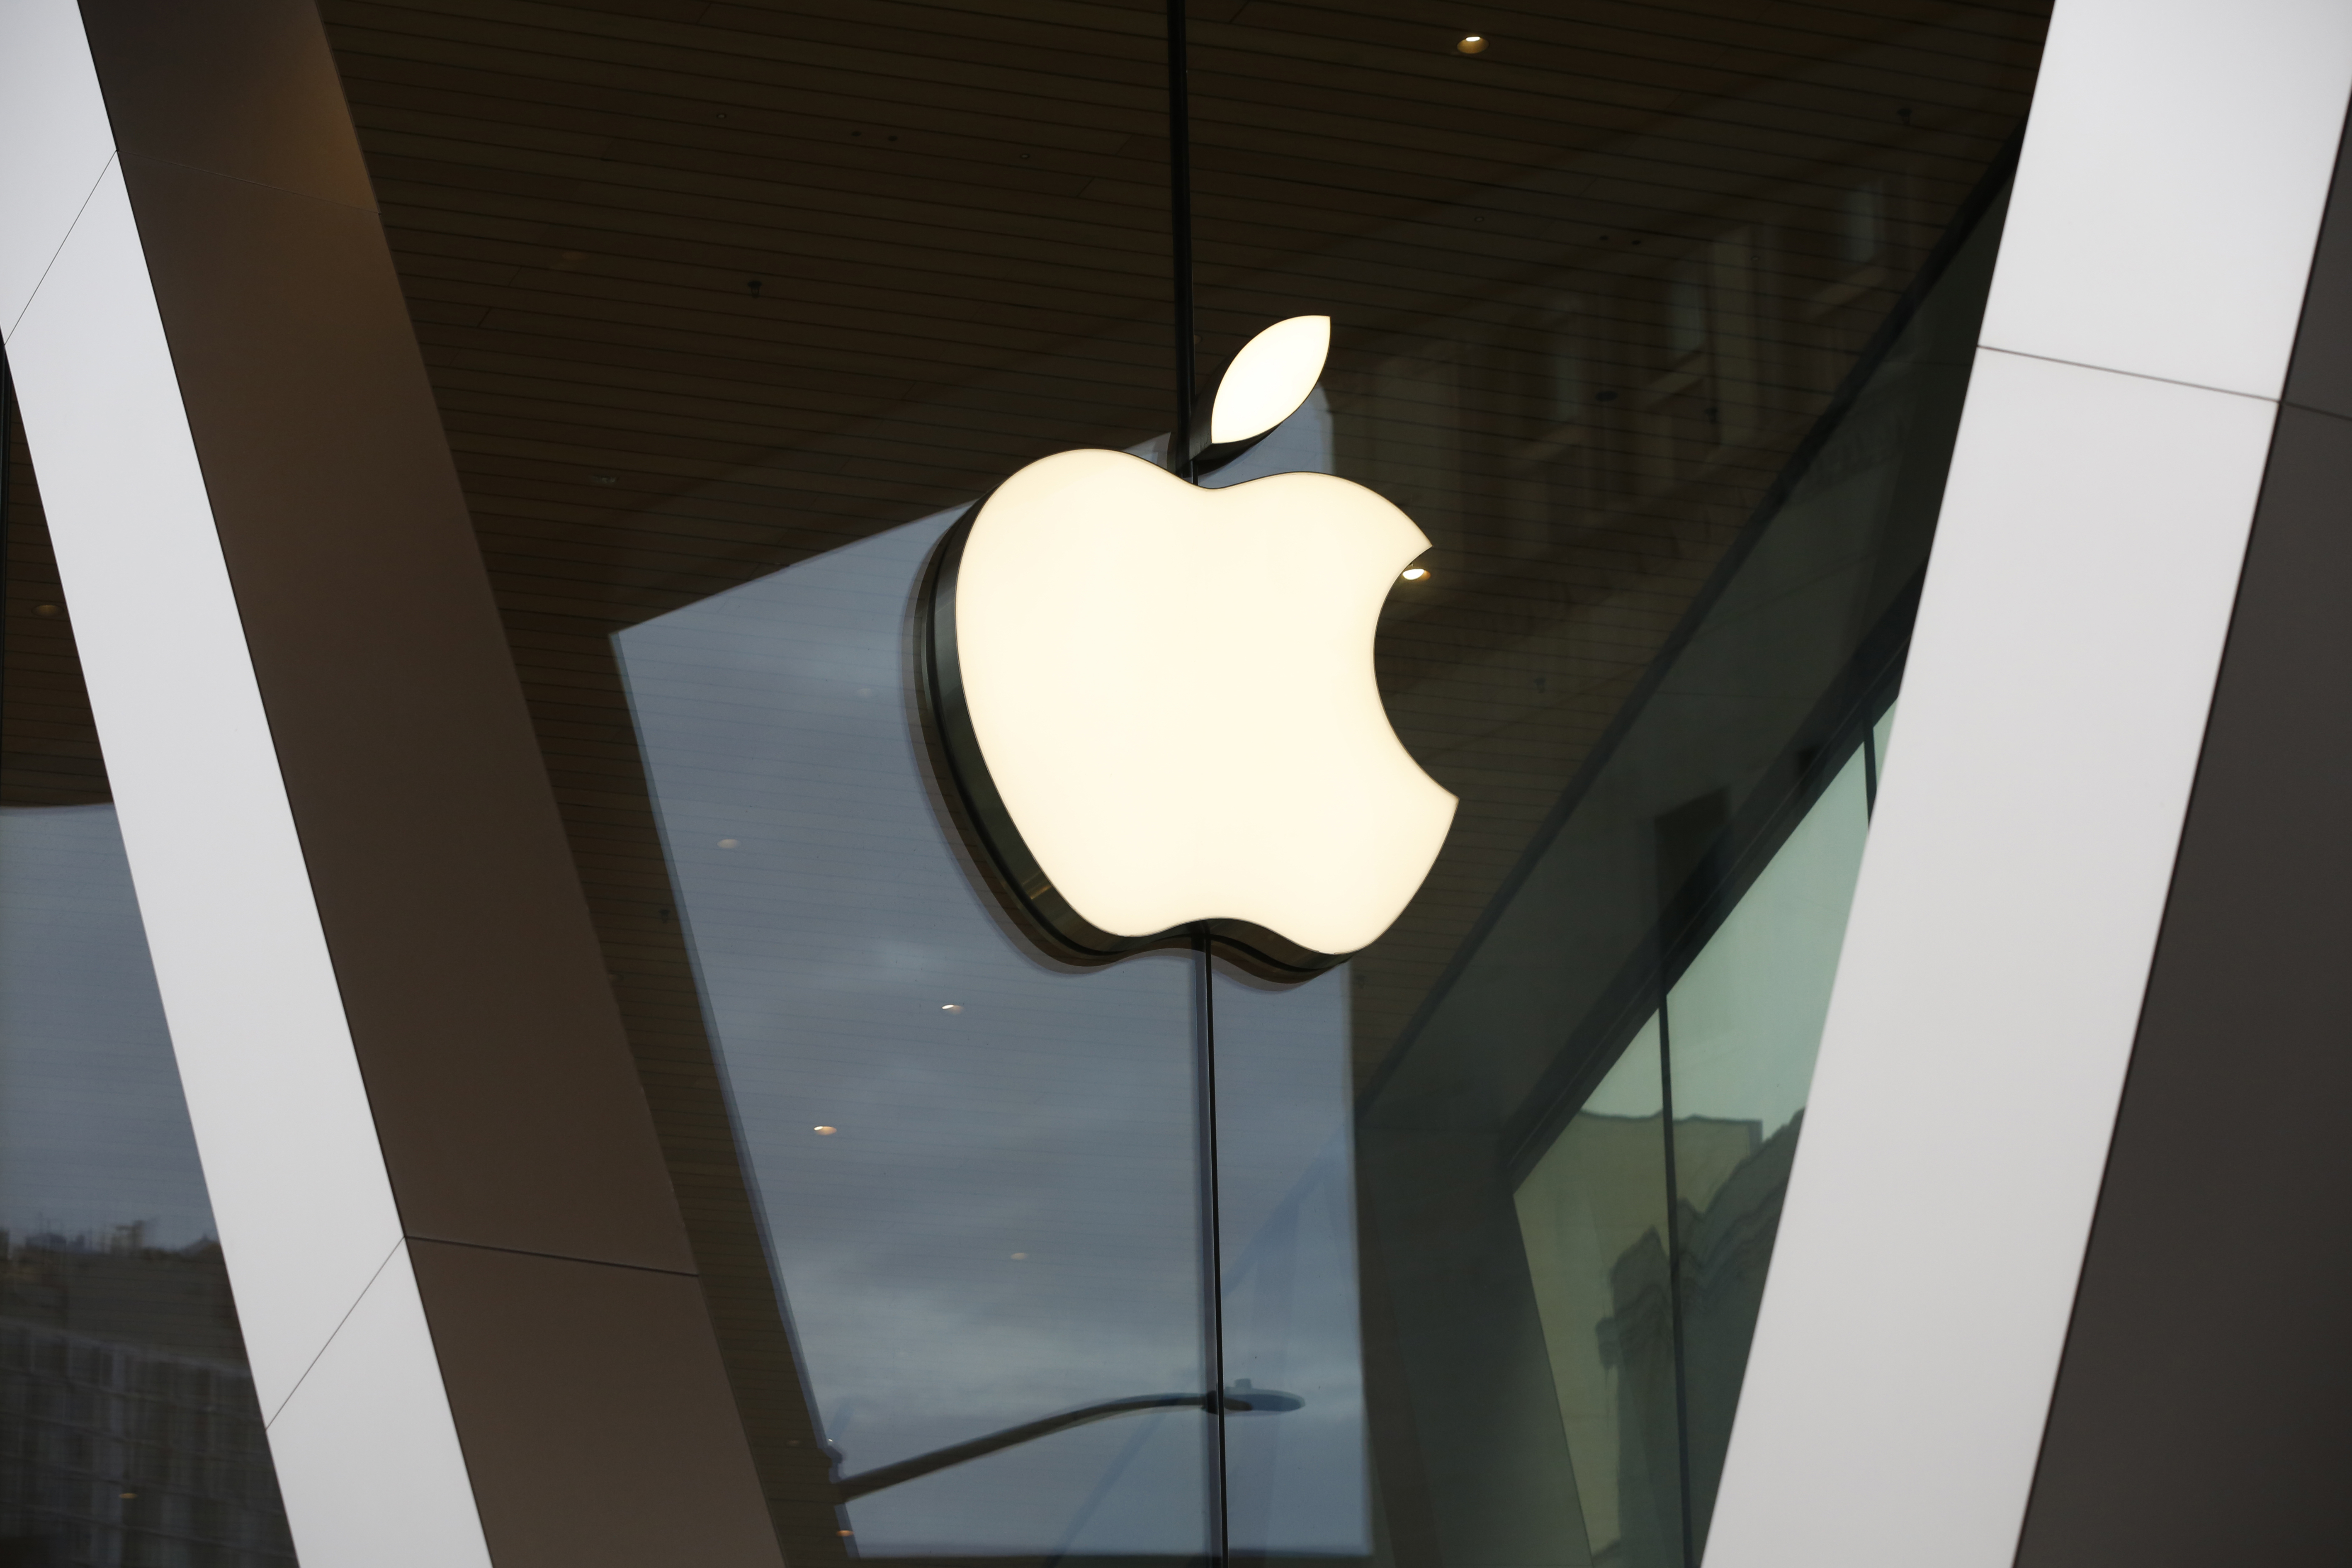 Apple suspends Fortnite maker Epic Games' App Store account